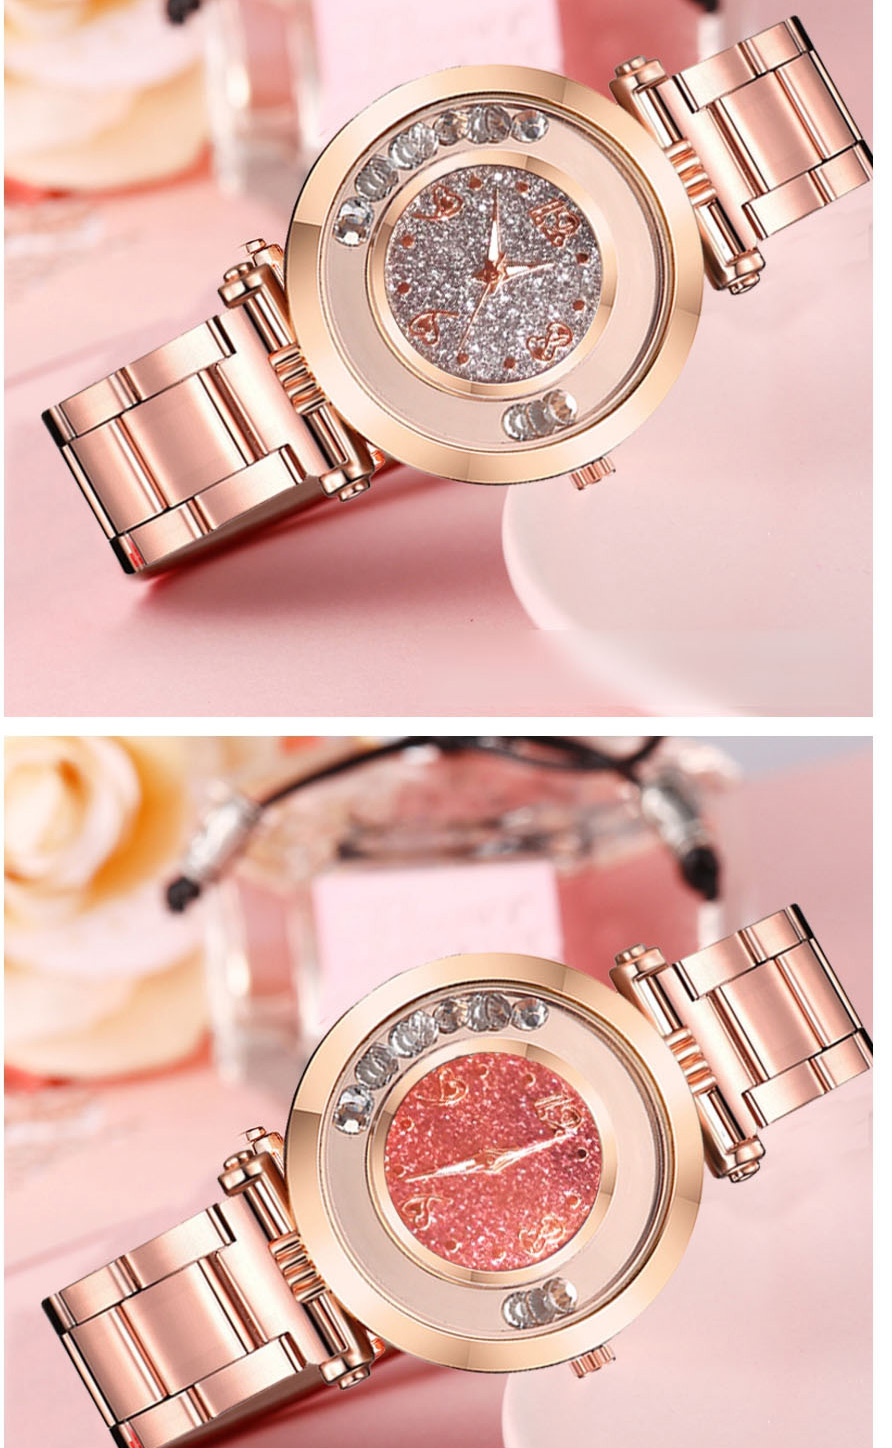 Fashion Blue Quartz Watch With Diamonds And Glitter,Ladies Watches